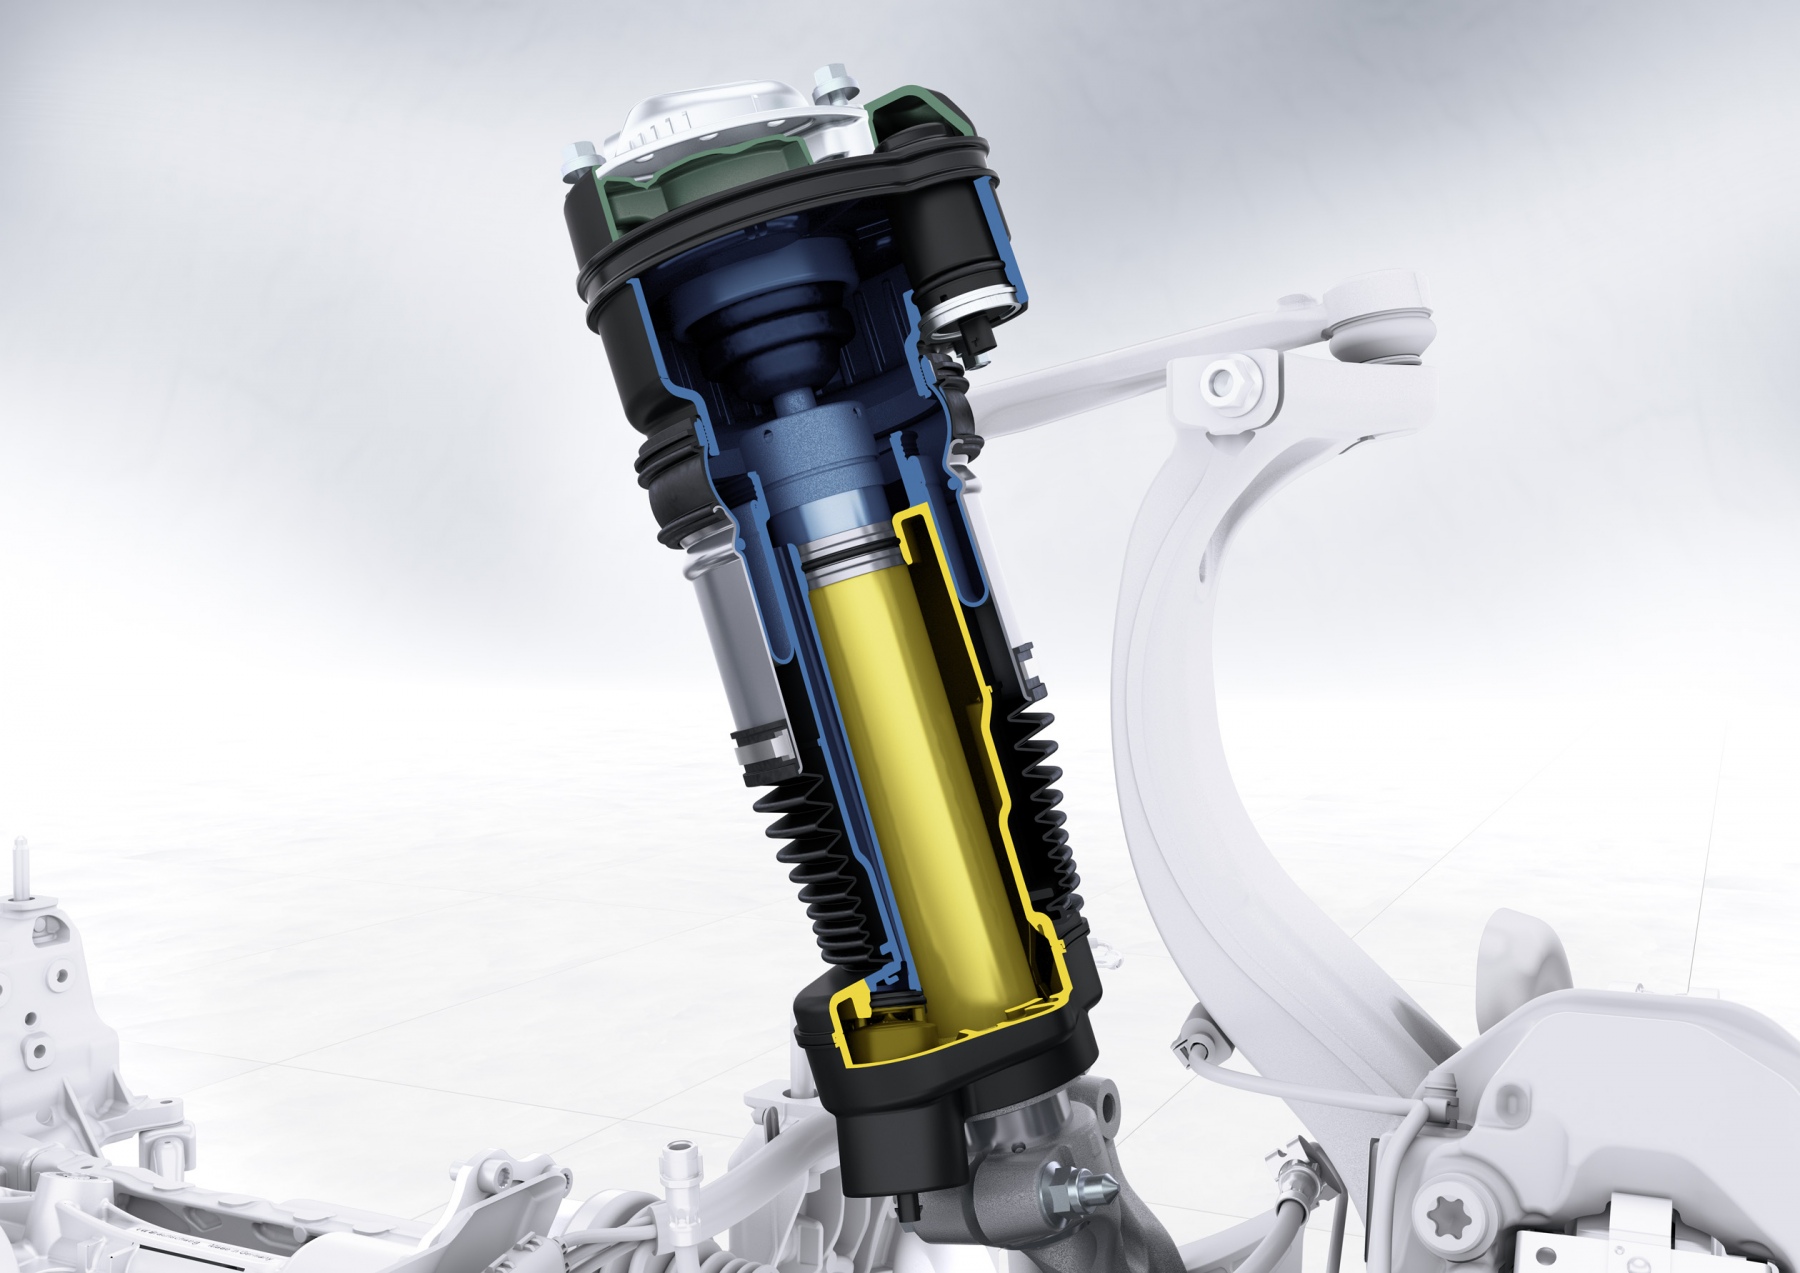 Cayenne: Three-chamber air suspension, 2019, Porsche AG